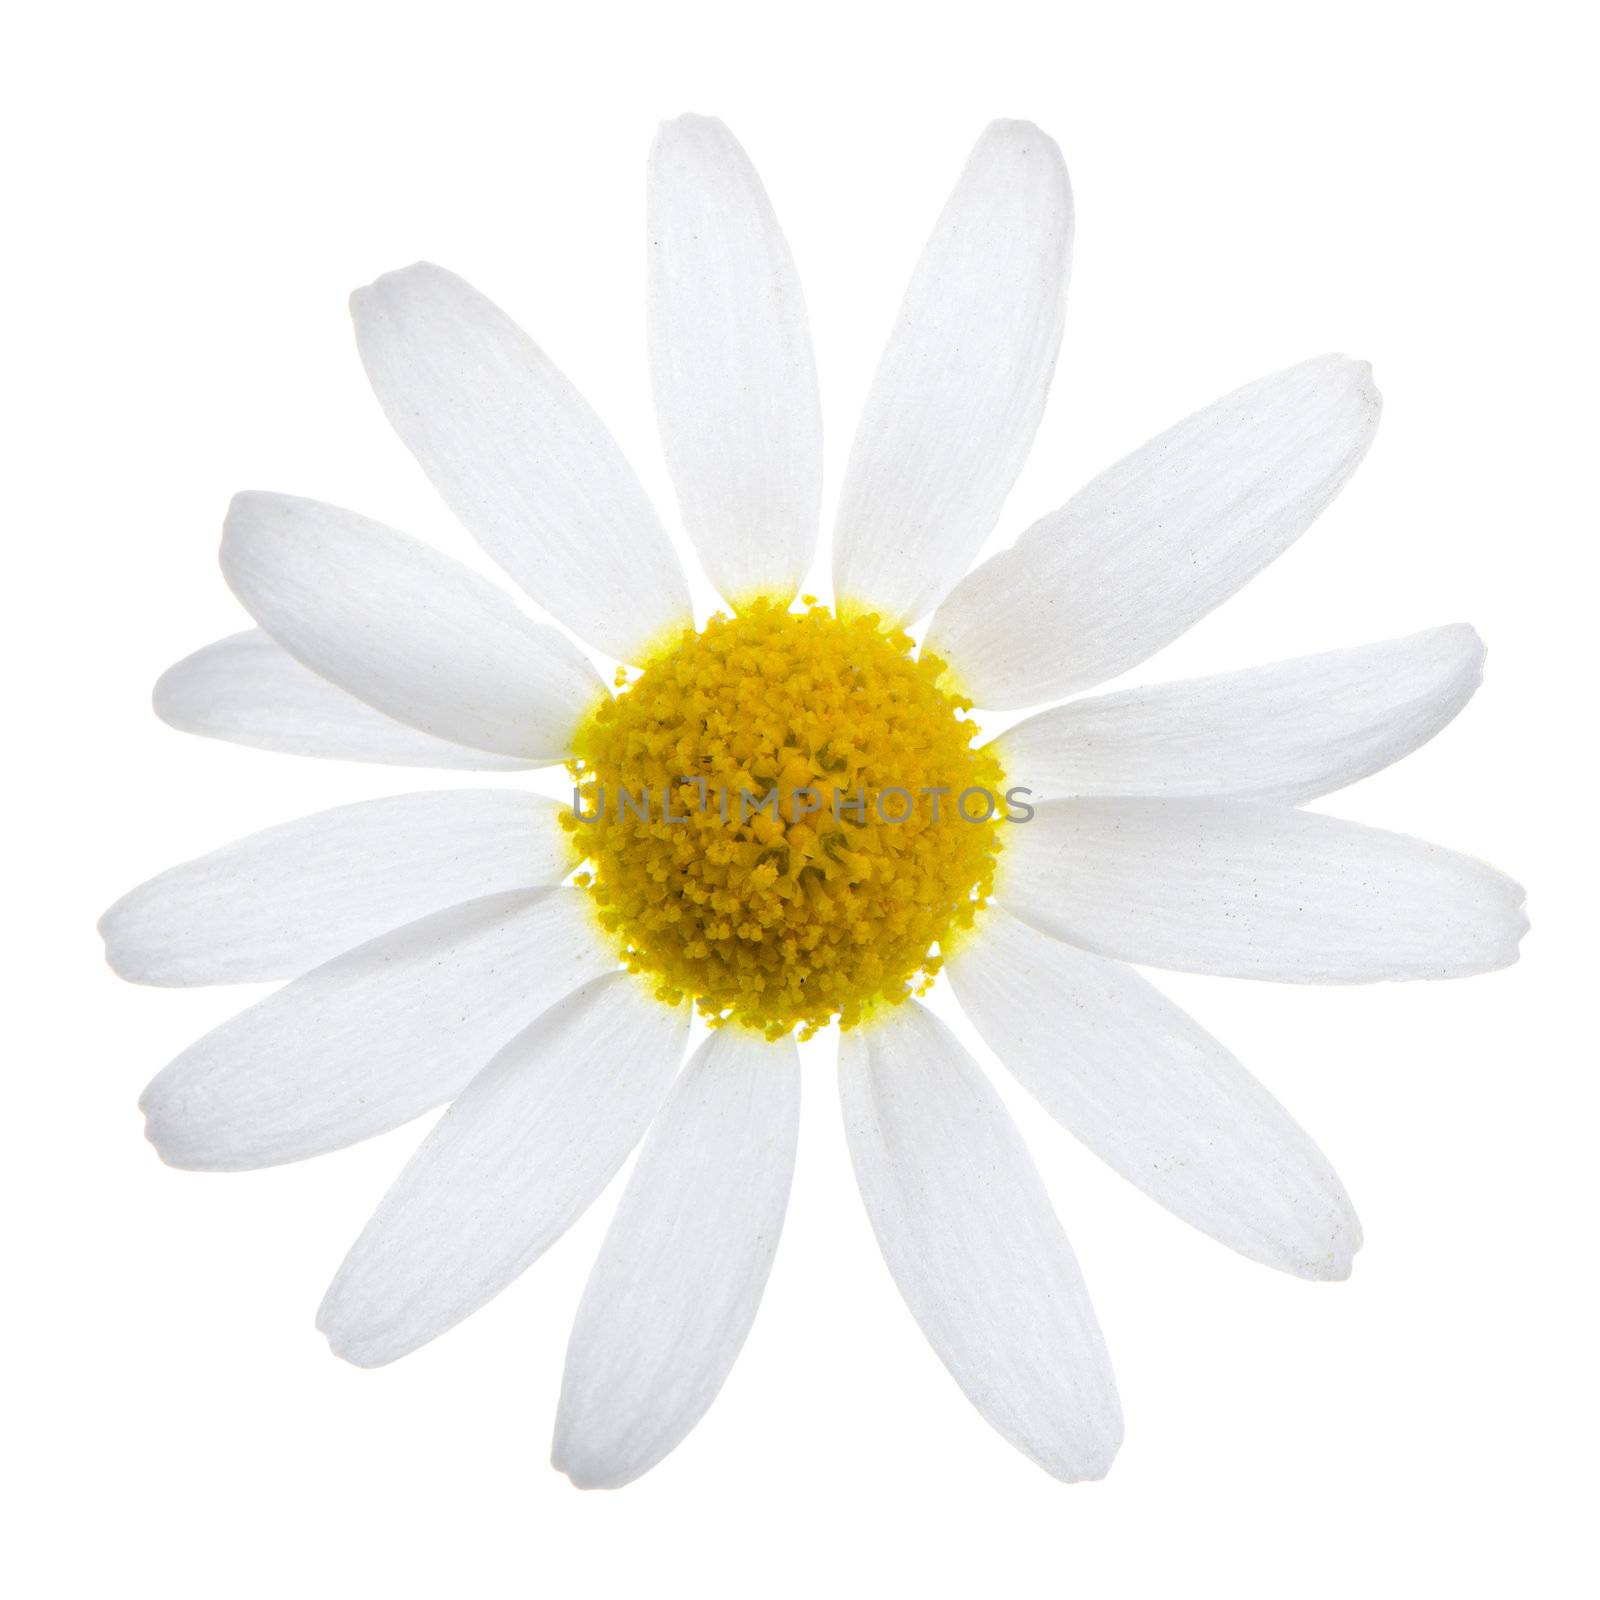 Beautiful white daisy flower isolated on white background.